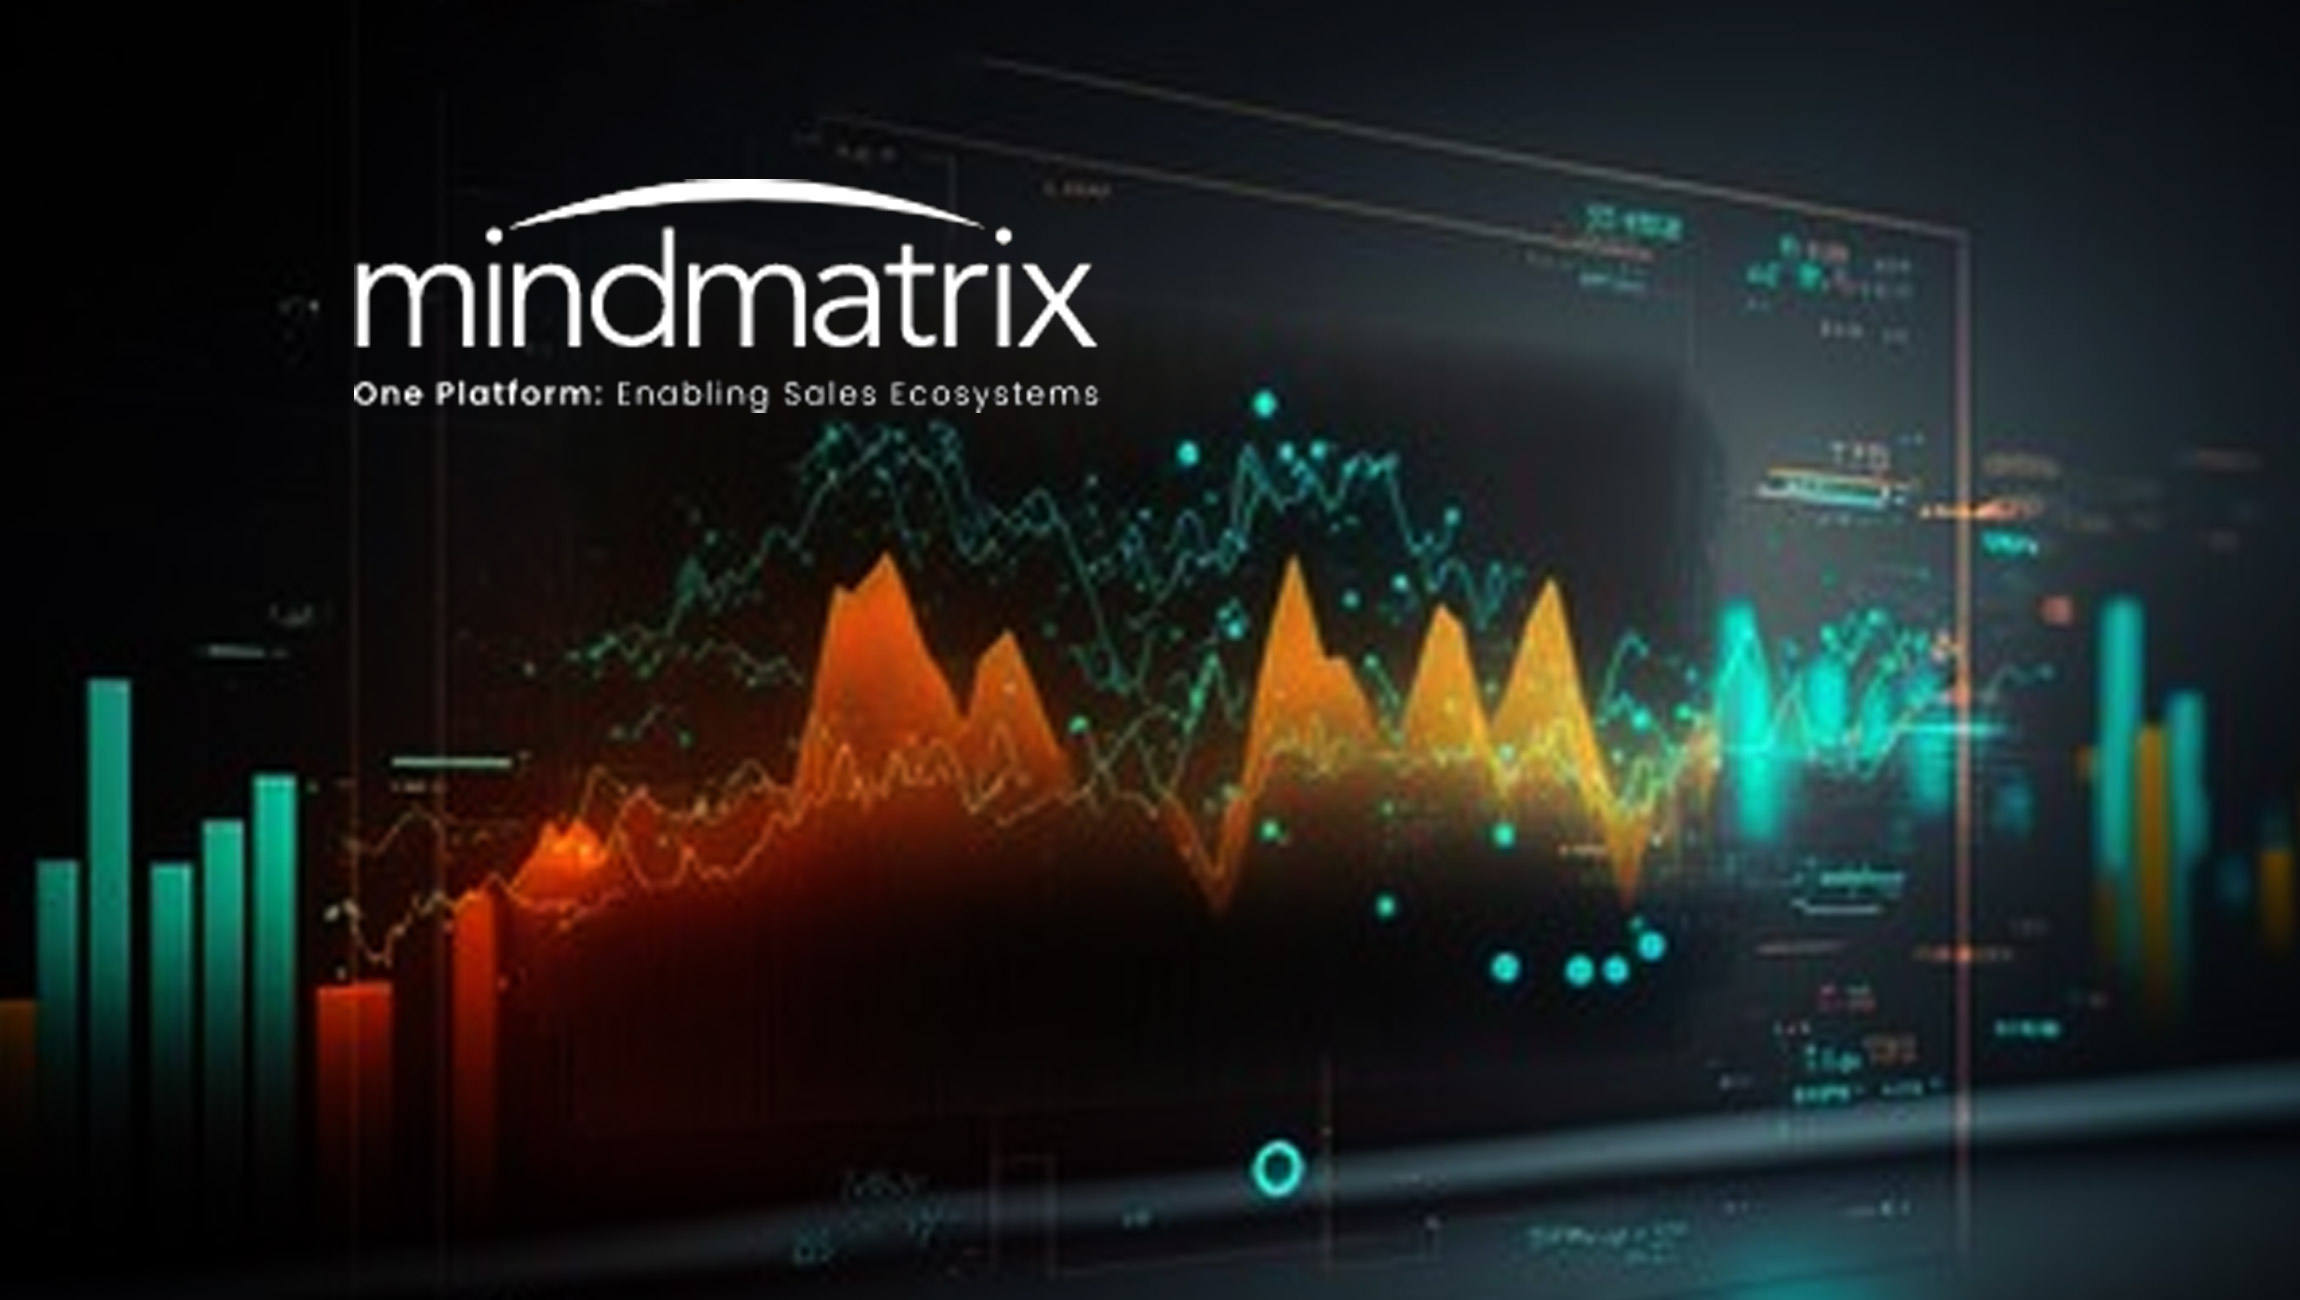 Mindmatrix redefines sales ecosystem enablement by facilitating many-to-many interactions through its latest platform, Bridge 5.0